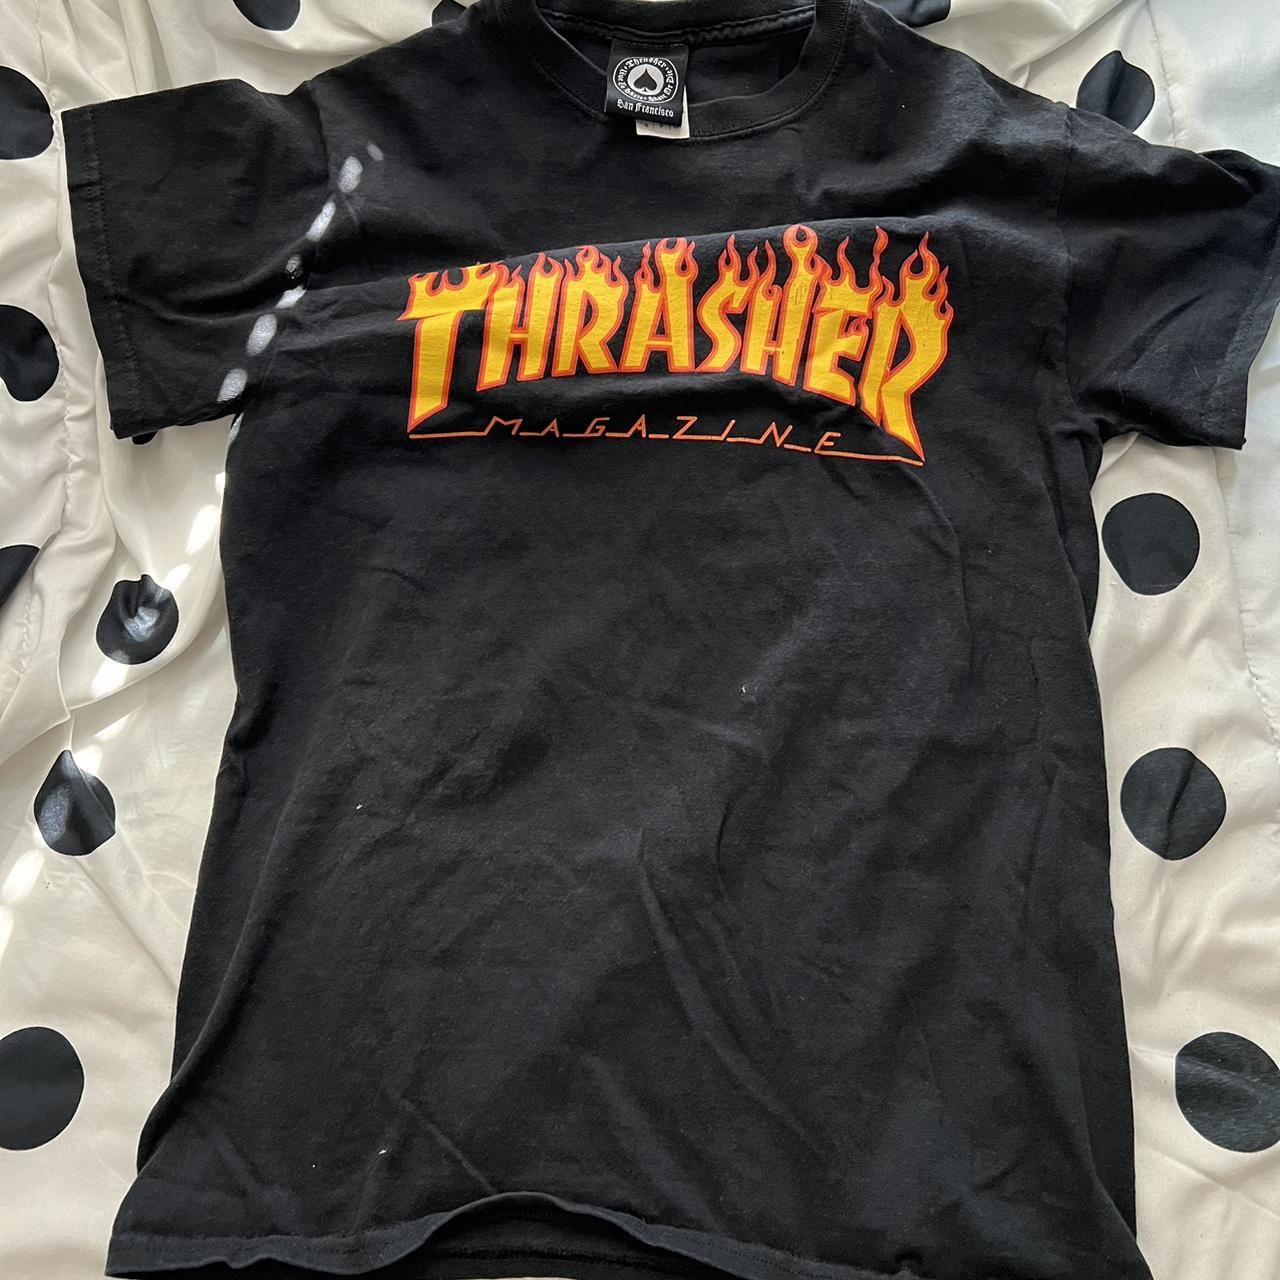 Thrasher Women's Black and Red T-shirt | Depop